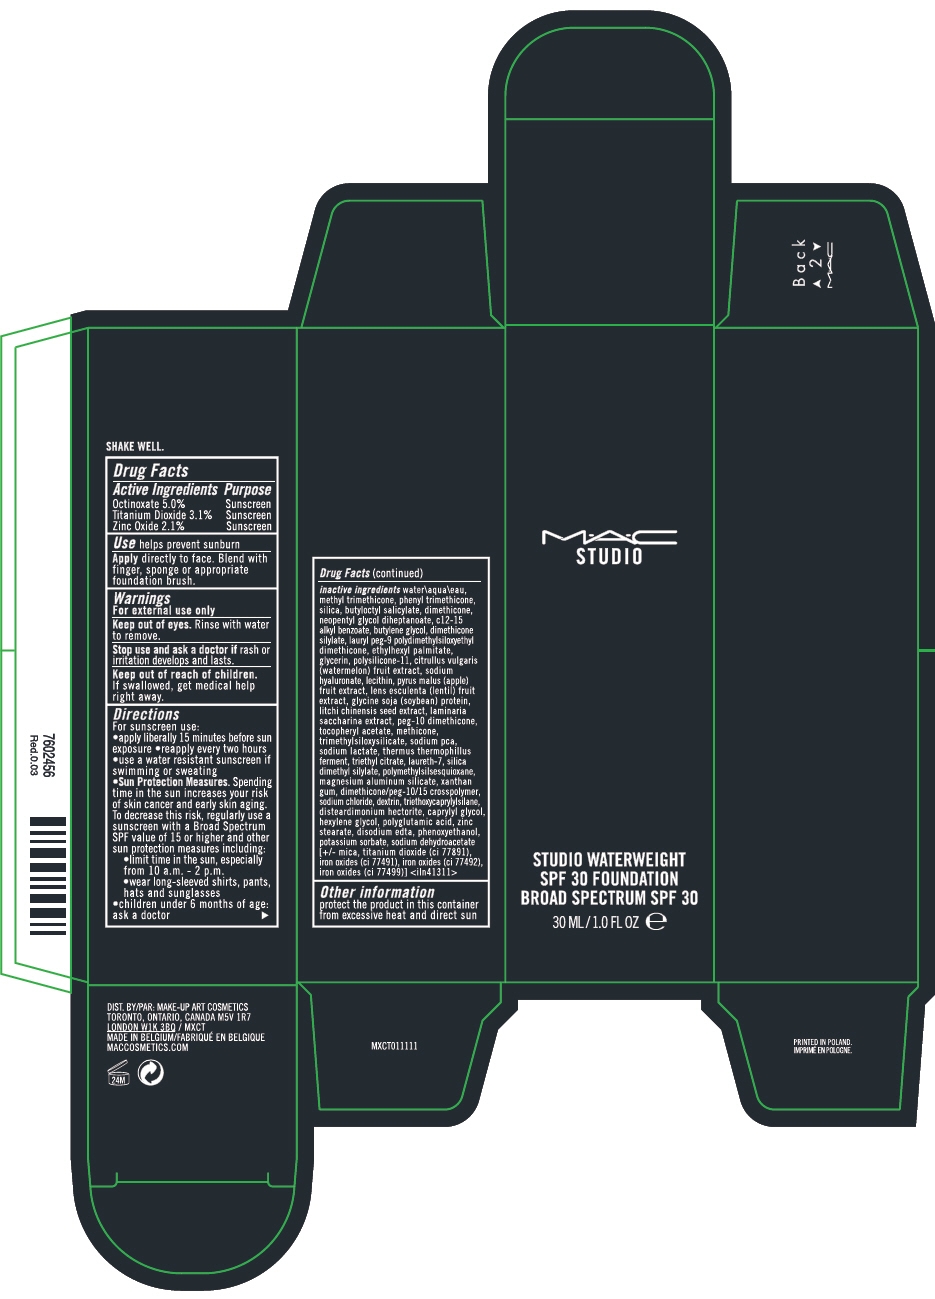 PRINCIPAL DISPLAY PANEL - 30 ML Bottle Carton